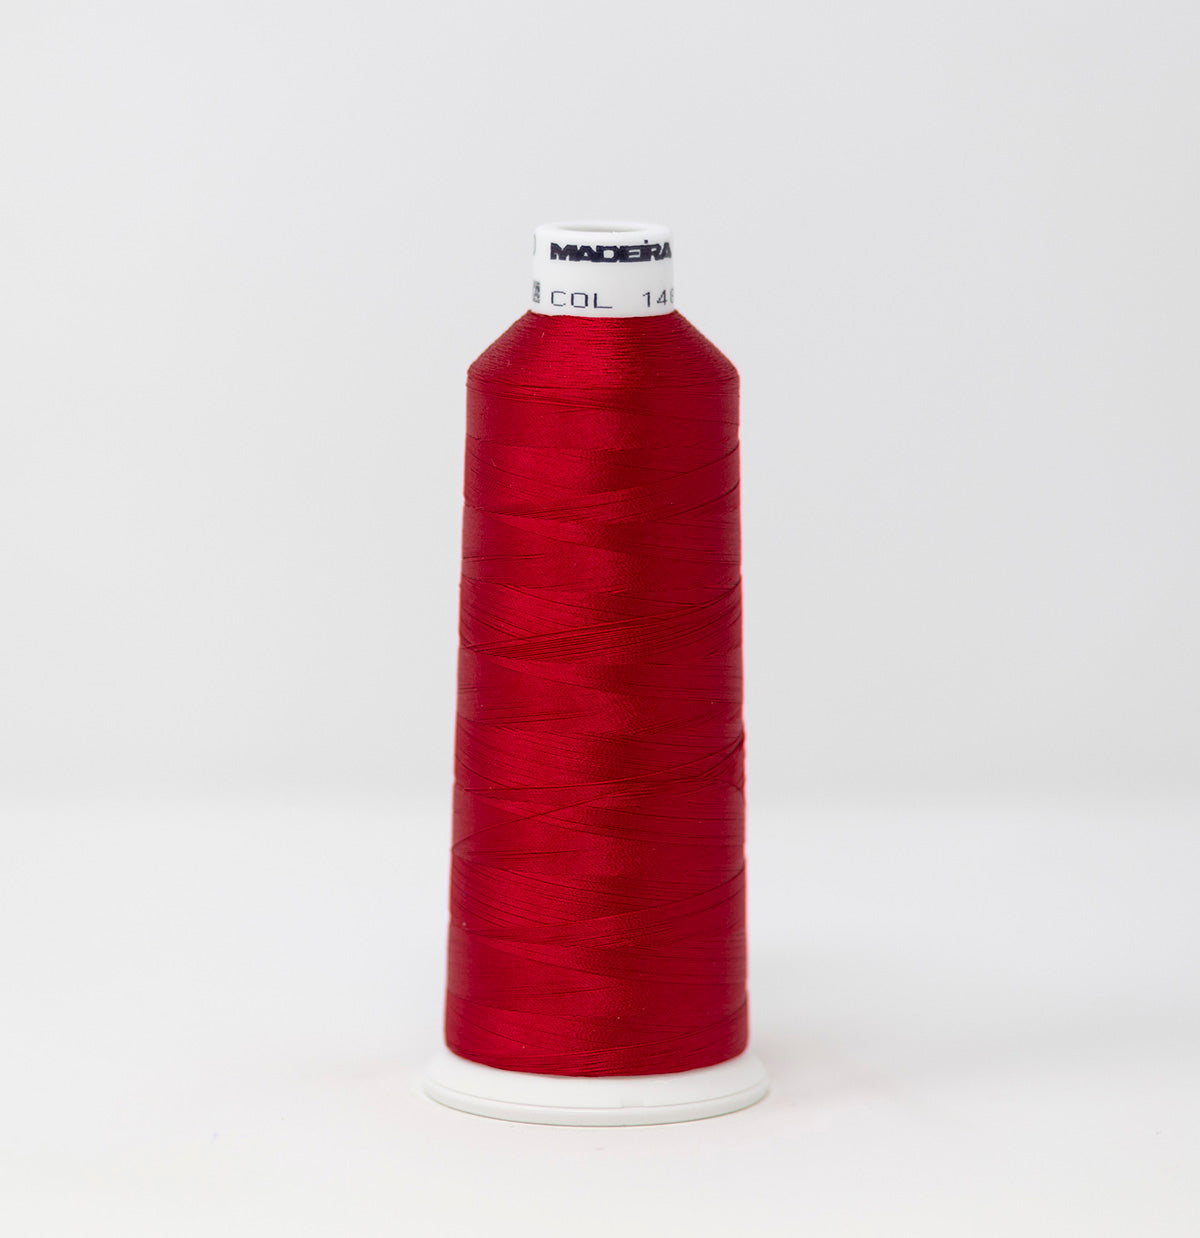 #910-1481 5,500 yard cone of #40 weight Cherry Pie Rayon machine embroidery thread.